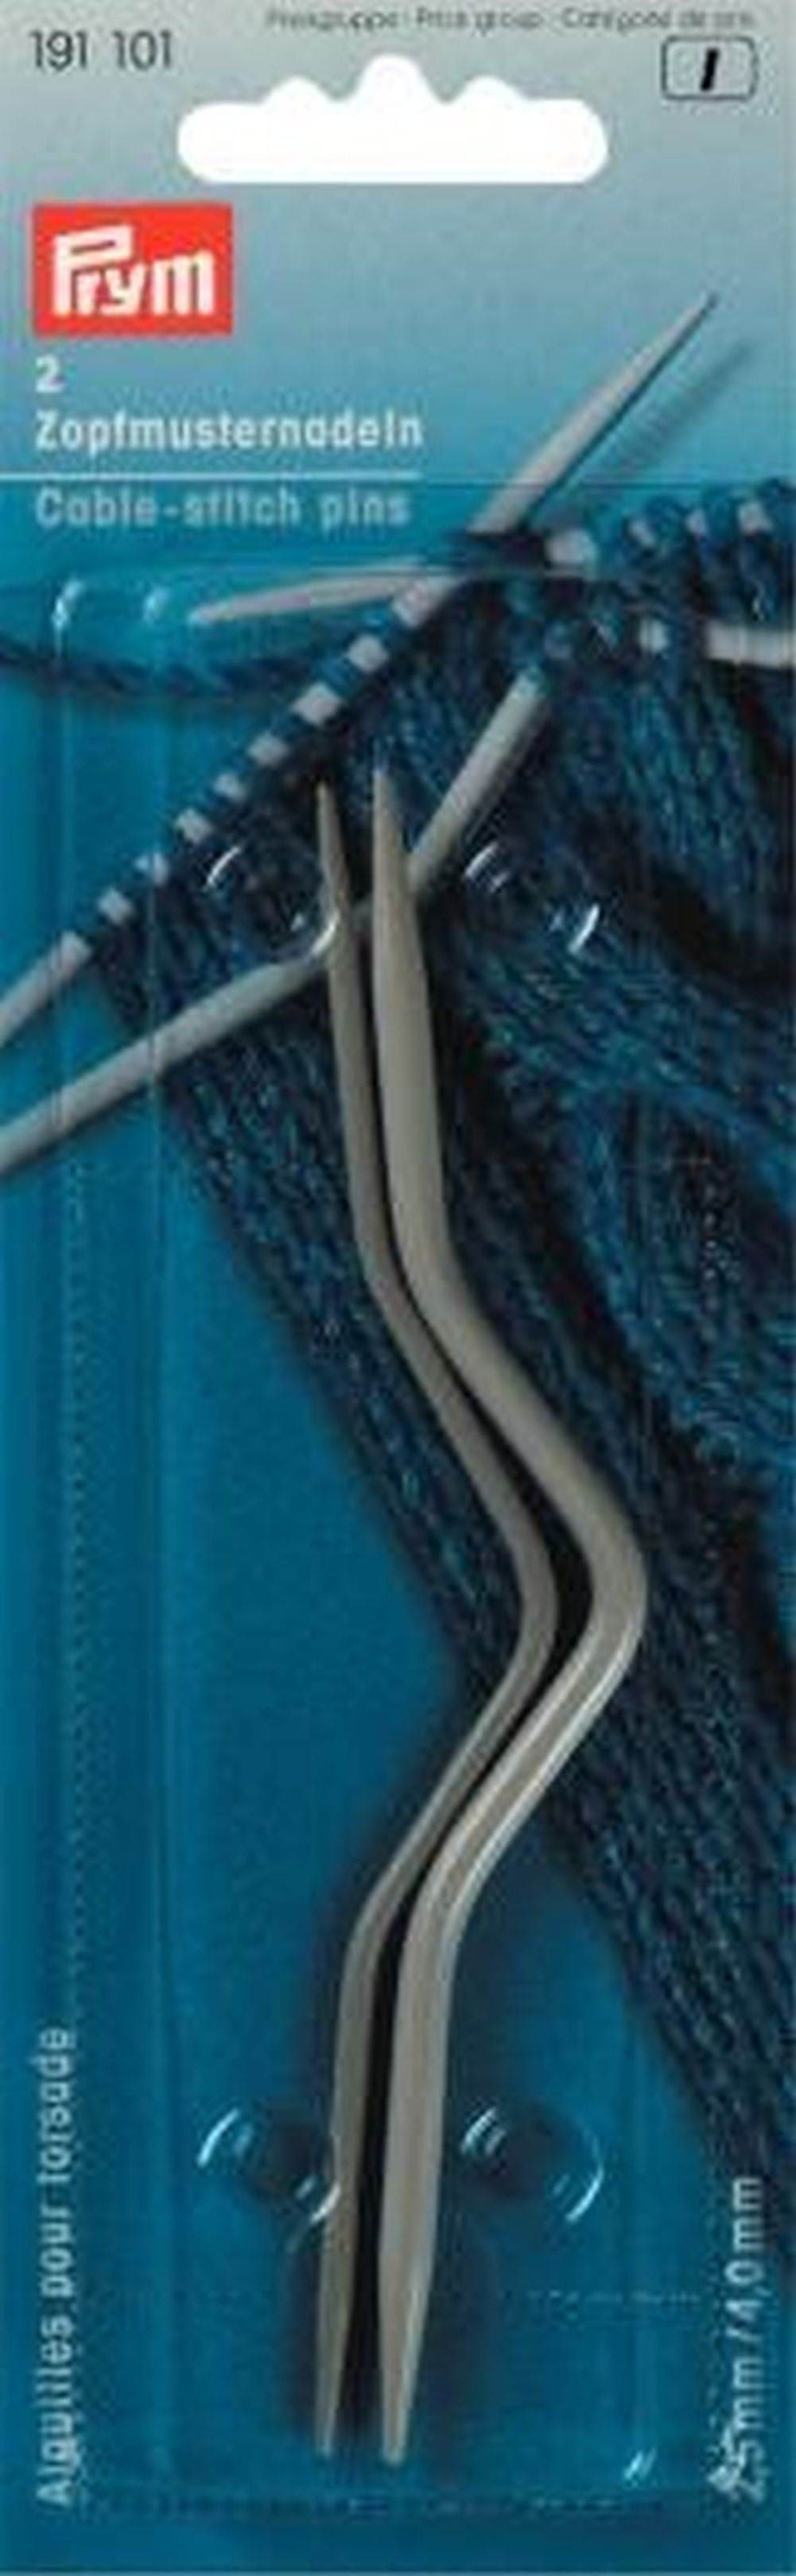 Prym Aluminium Cable Stitch Pins - 2.5mm & 4mm